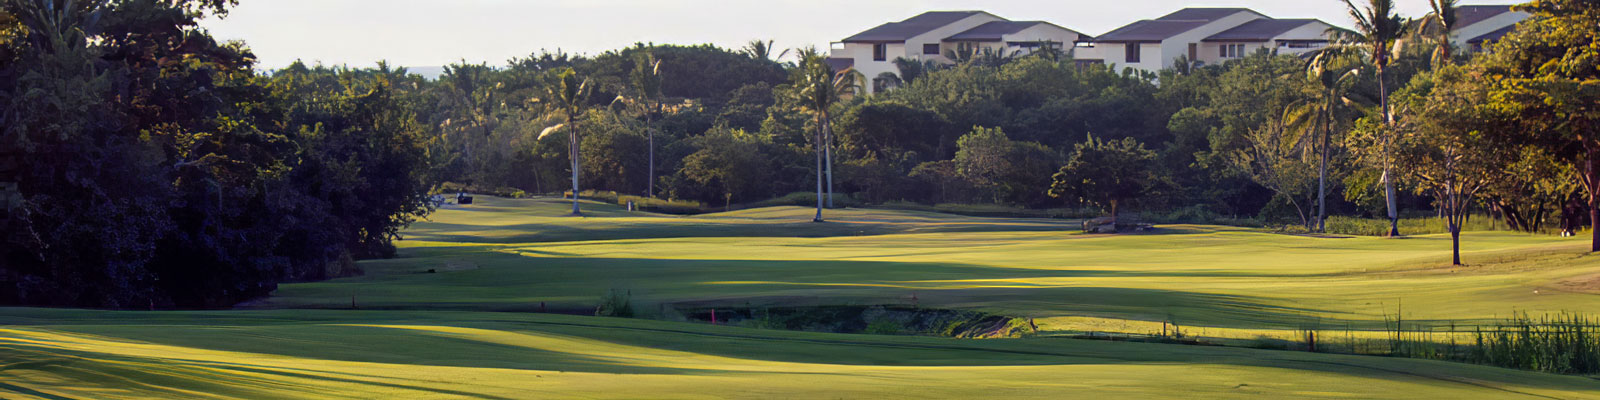 Casa Querencia - Luxury Home Rental - Two Championship Golf Courses - Punta Mita Mexico